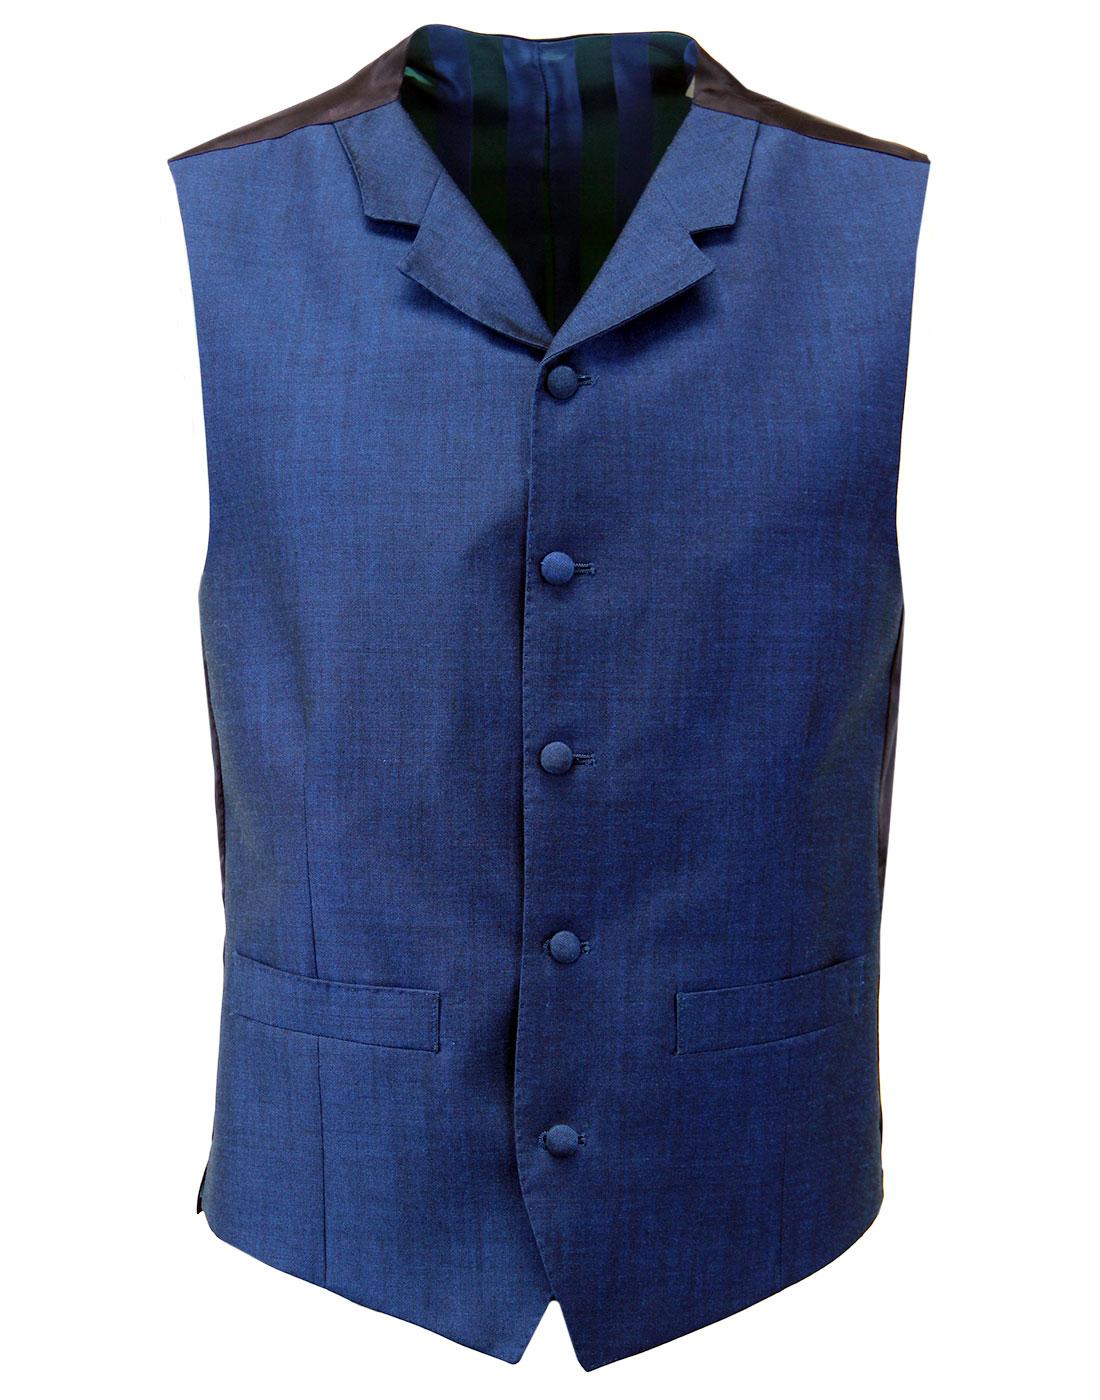 Madcap England Mohair Tonic Retro Mod Suit Waistcoat